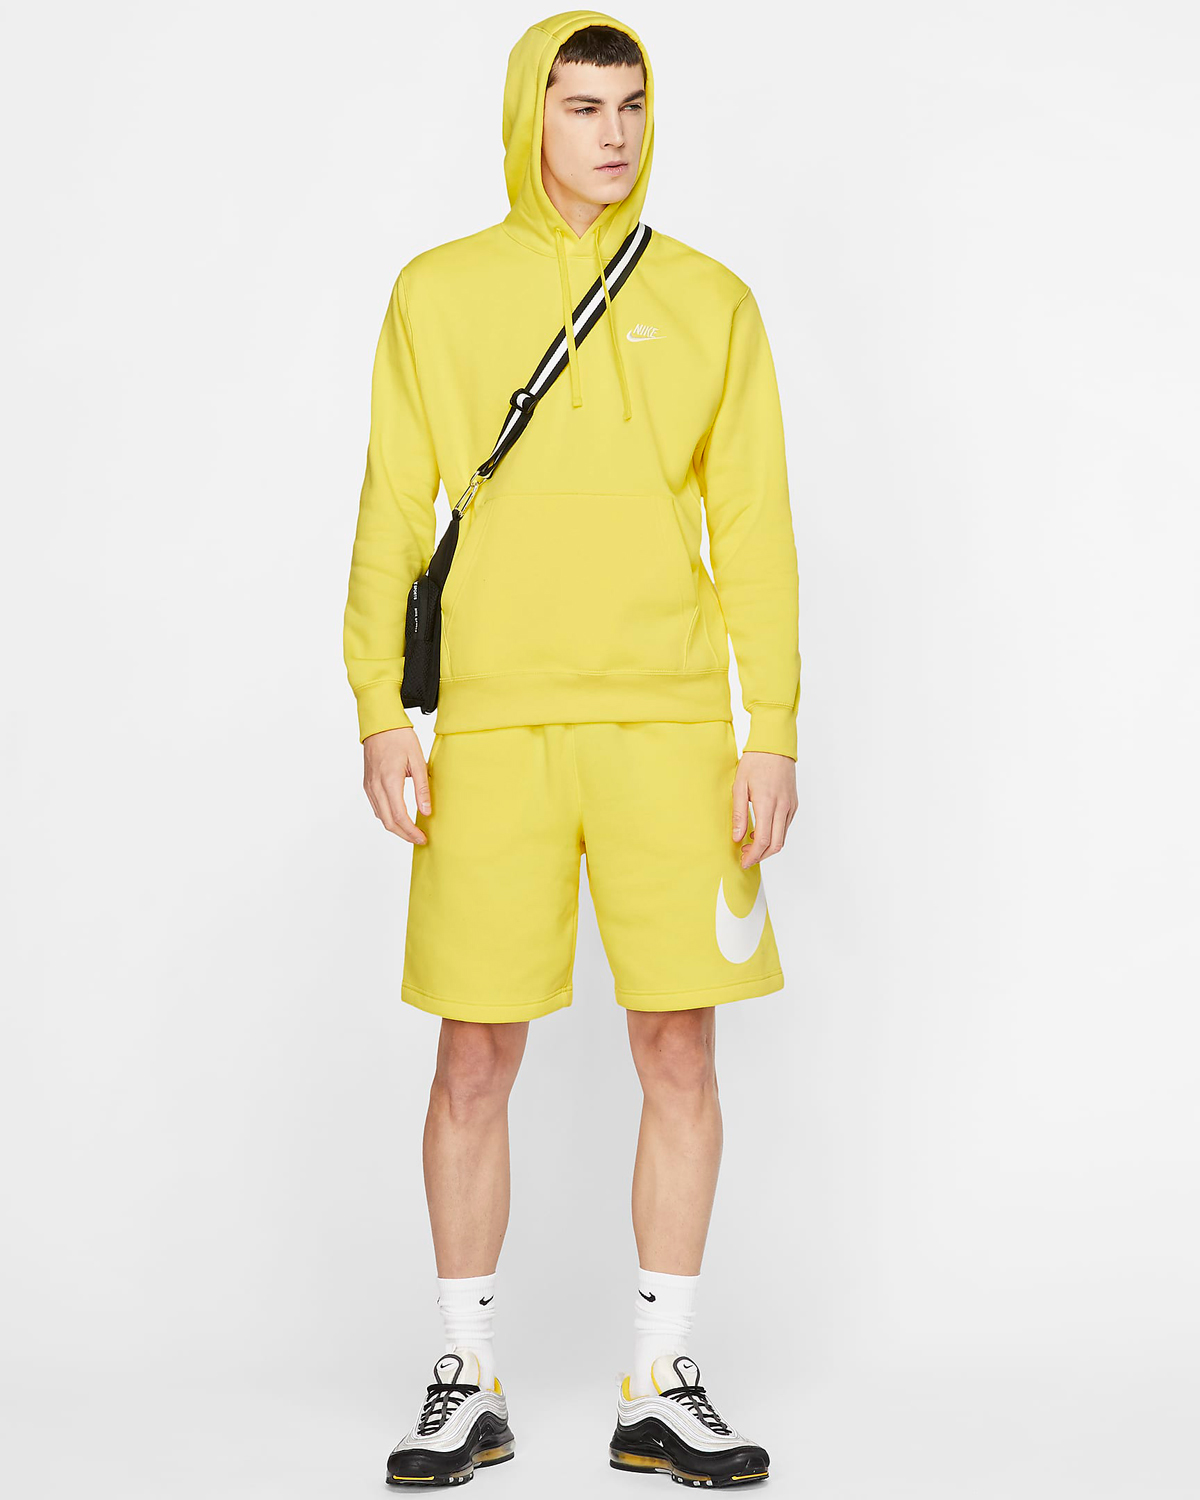 Nike Sportswear Opti Yellow Shirts Clothing Sneaker Outfits